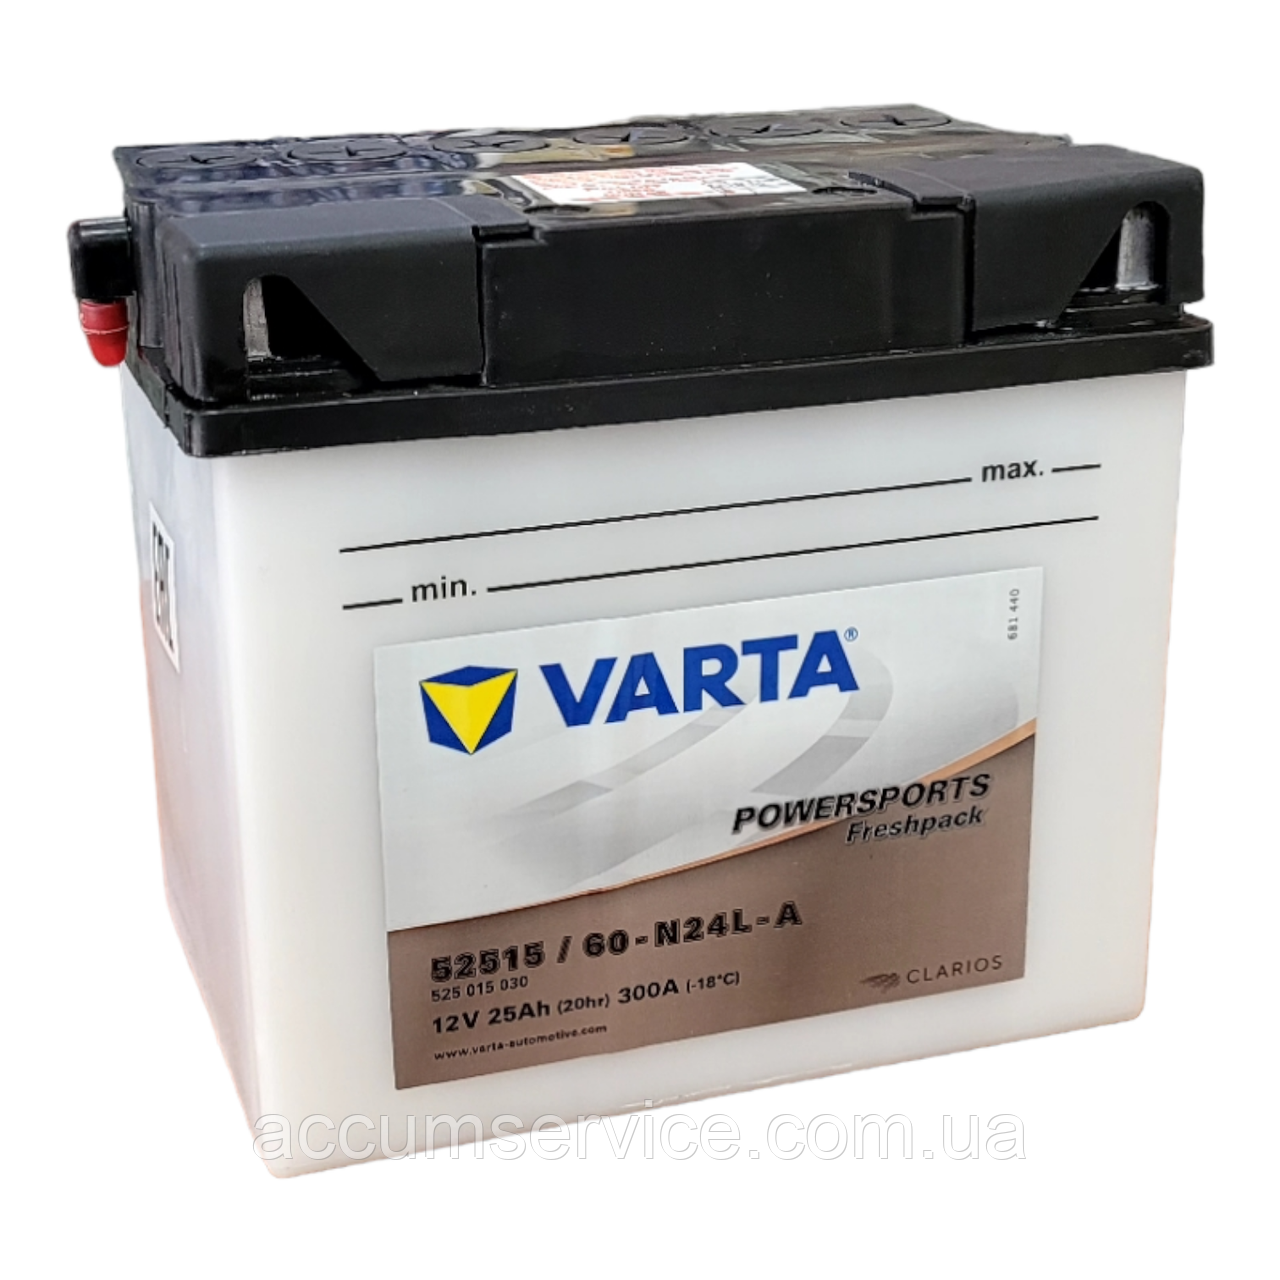 Акумулятор VARTA POWERSPORTS FP 525015030 I314